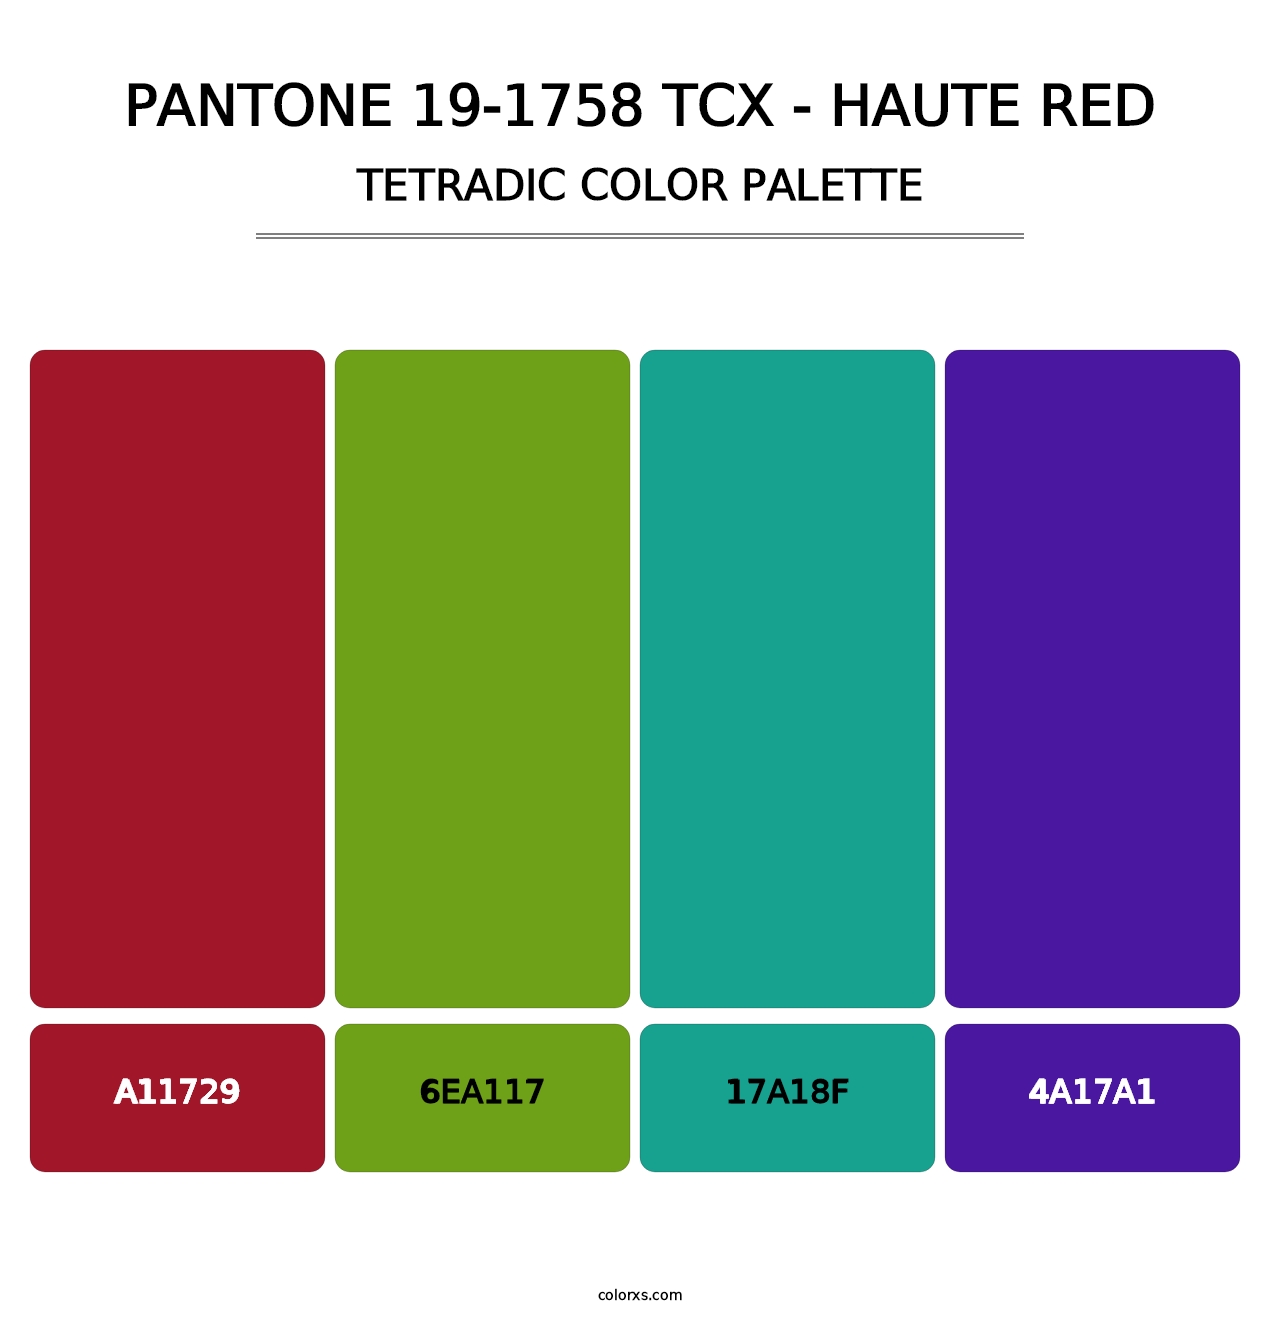 PANTONE 19-1758 TCX - Haute Red - Tetradic Color Palette